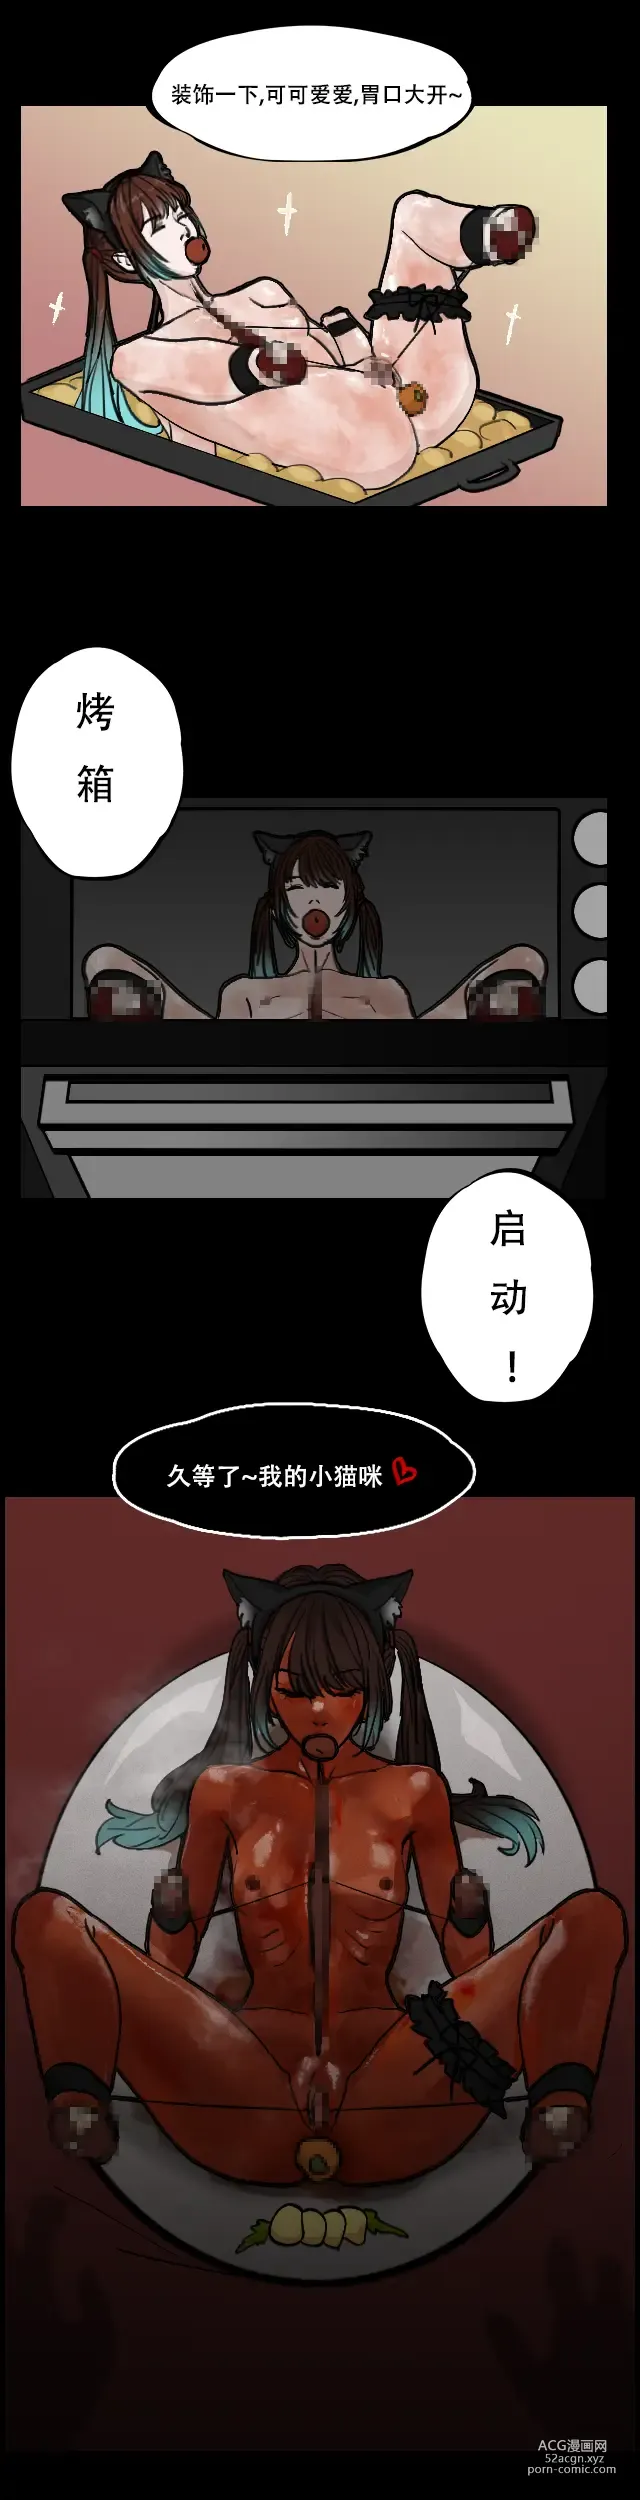 Page 10 of doujinshi 宅男之愿